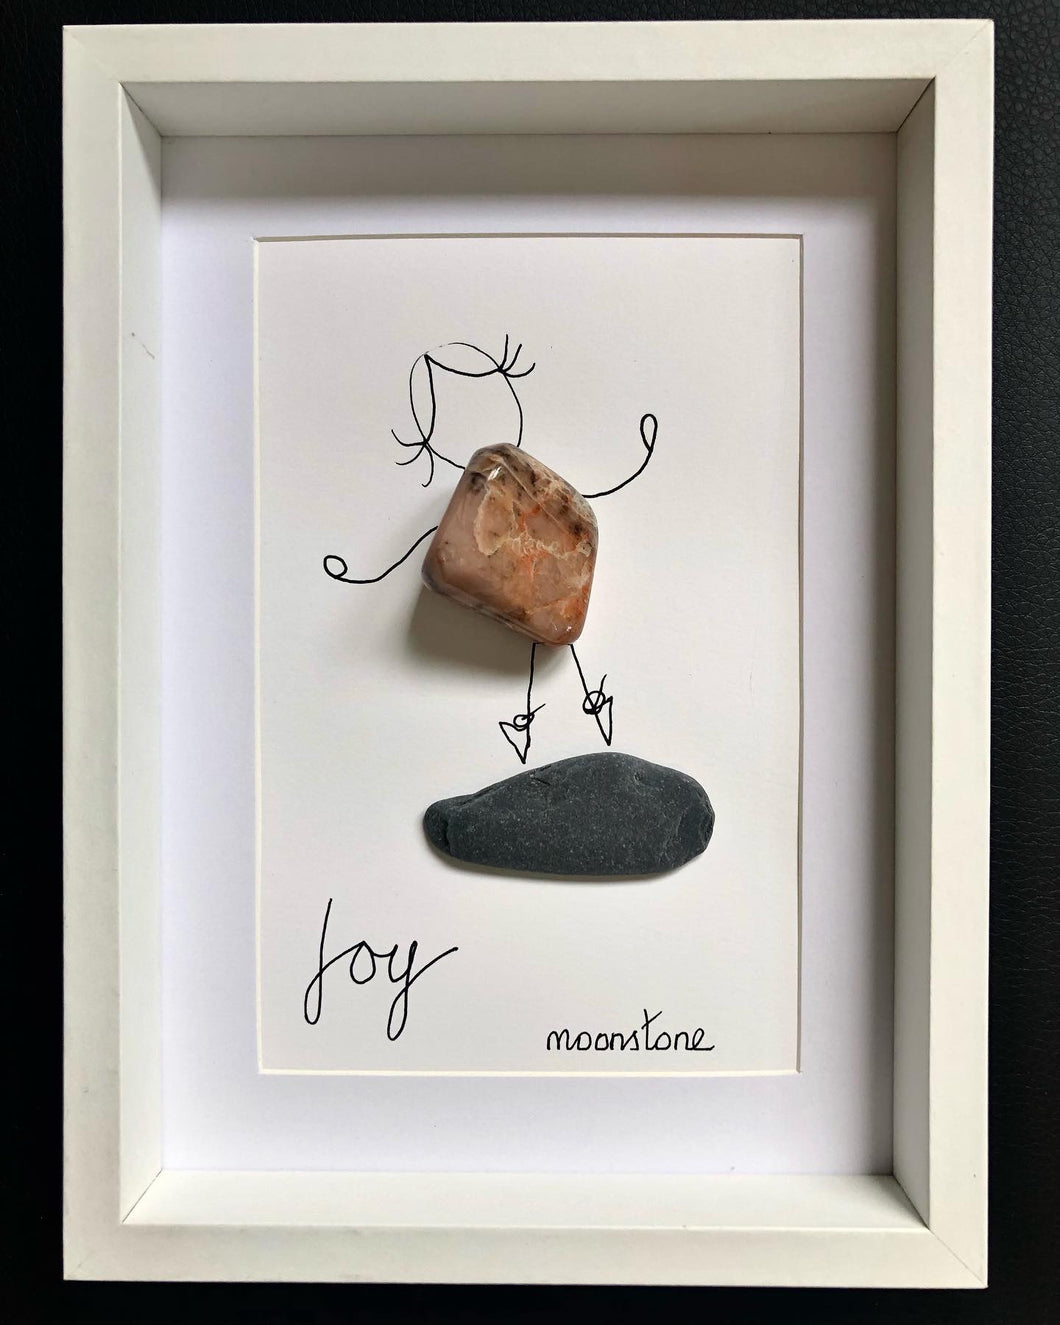 Joy (moonstone)